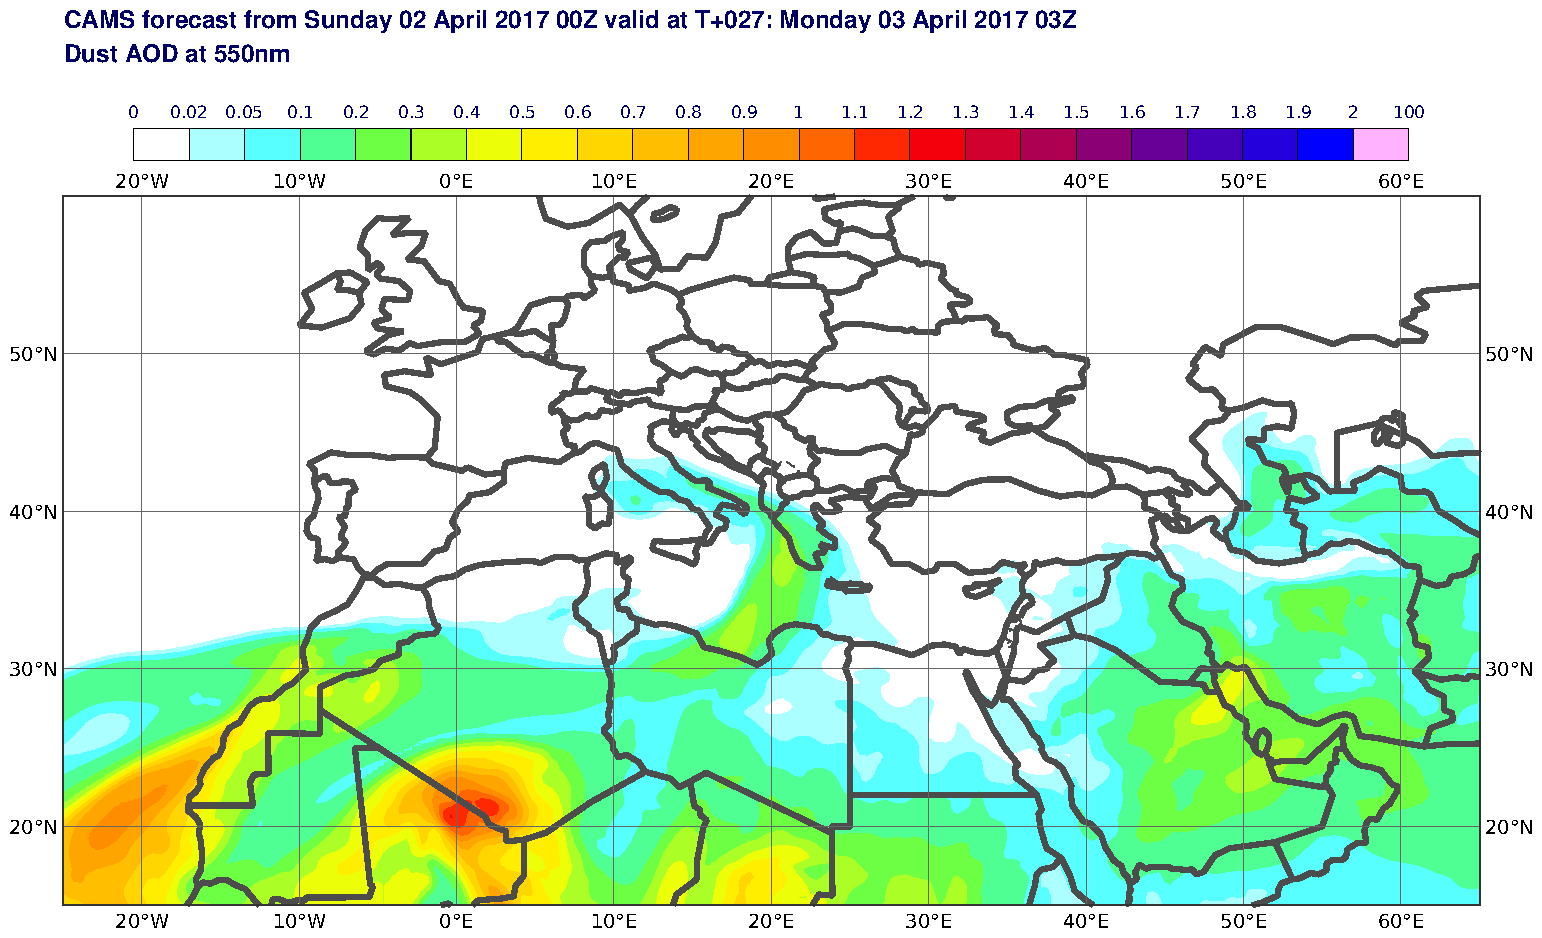 Dust AOD at 550nm valid at T27 - 2017-04-03 03:00